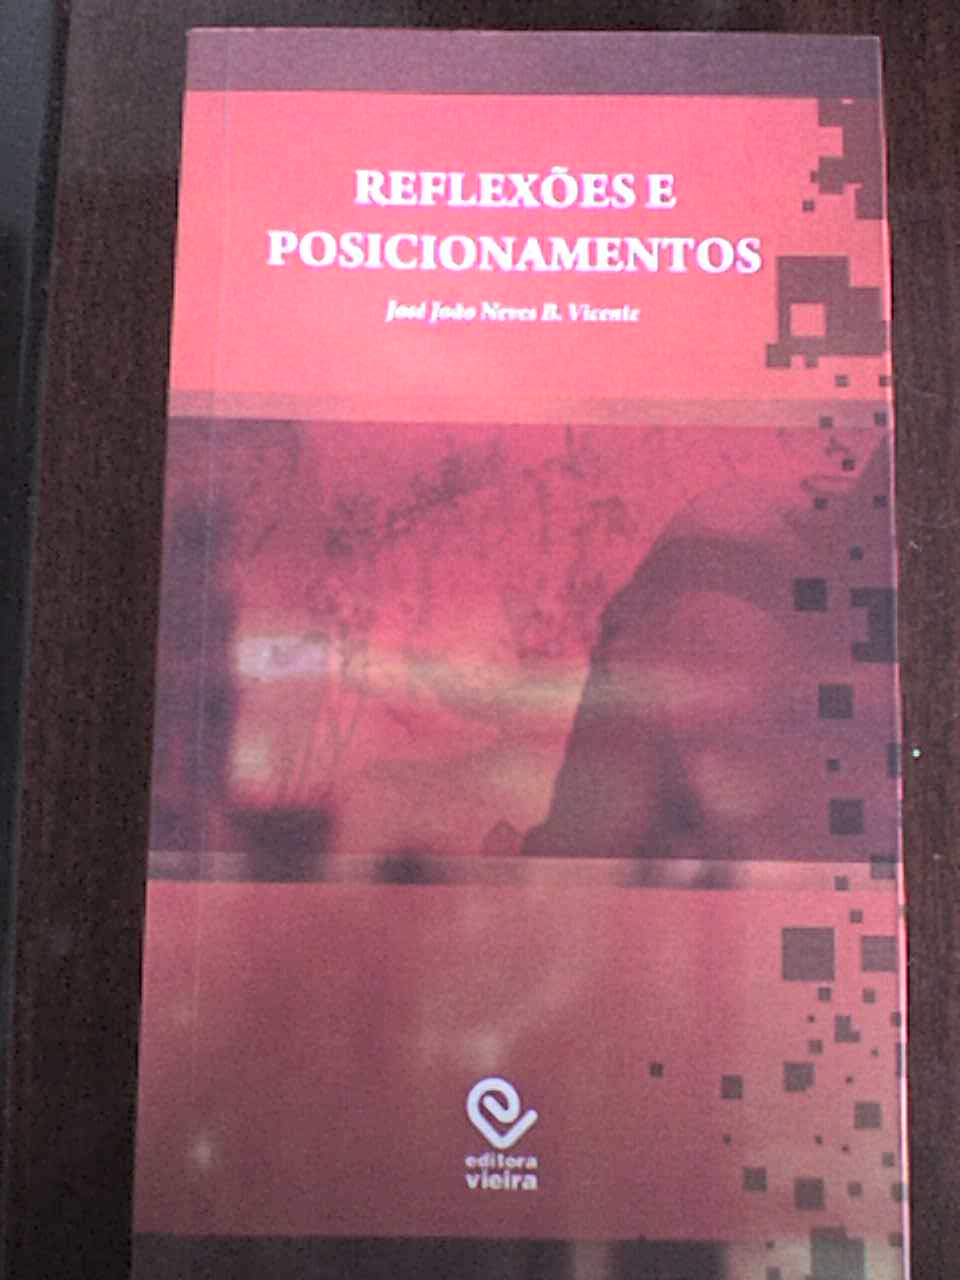 Livro Prof. José João Vicente 2009